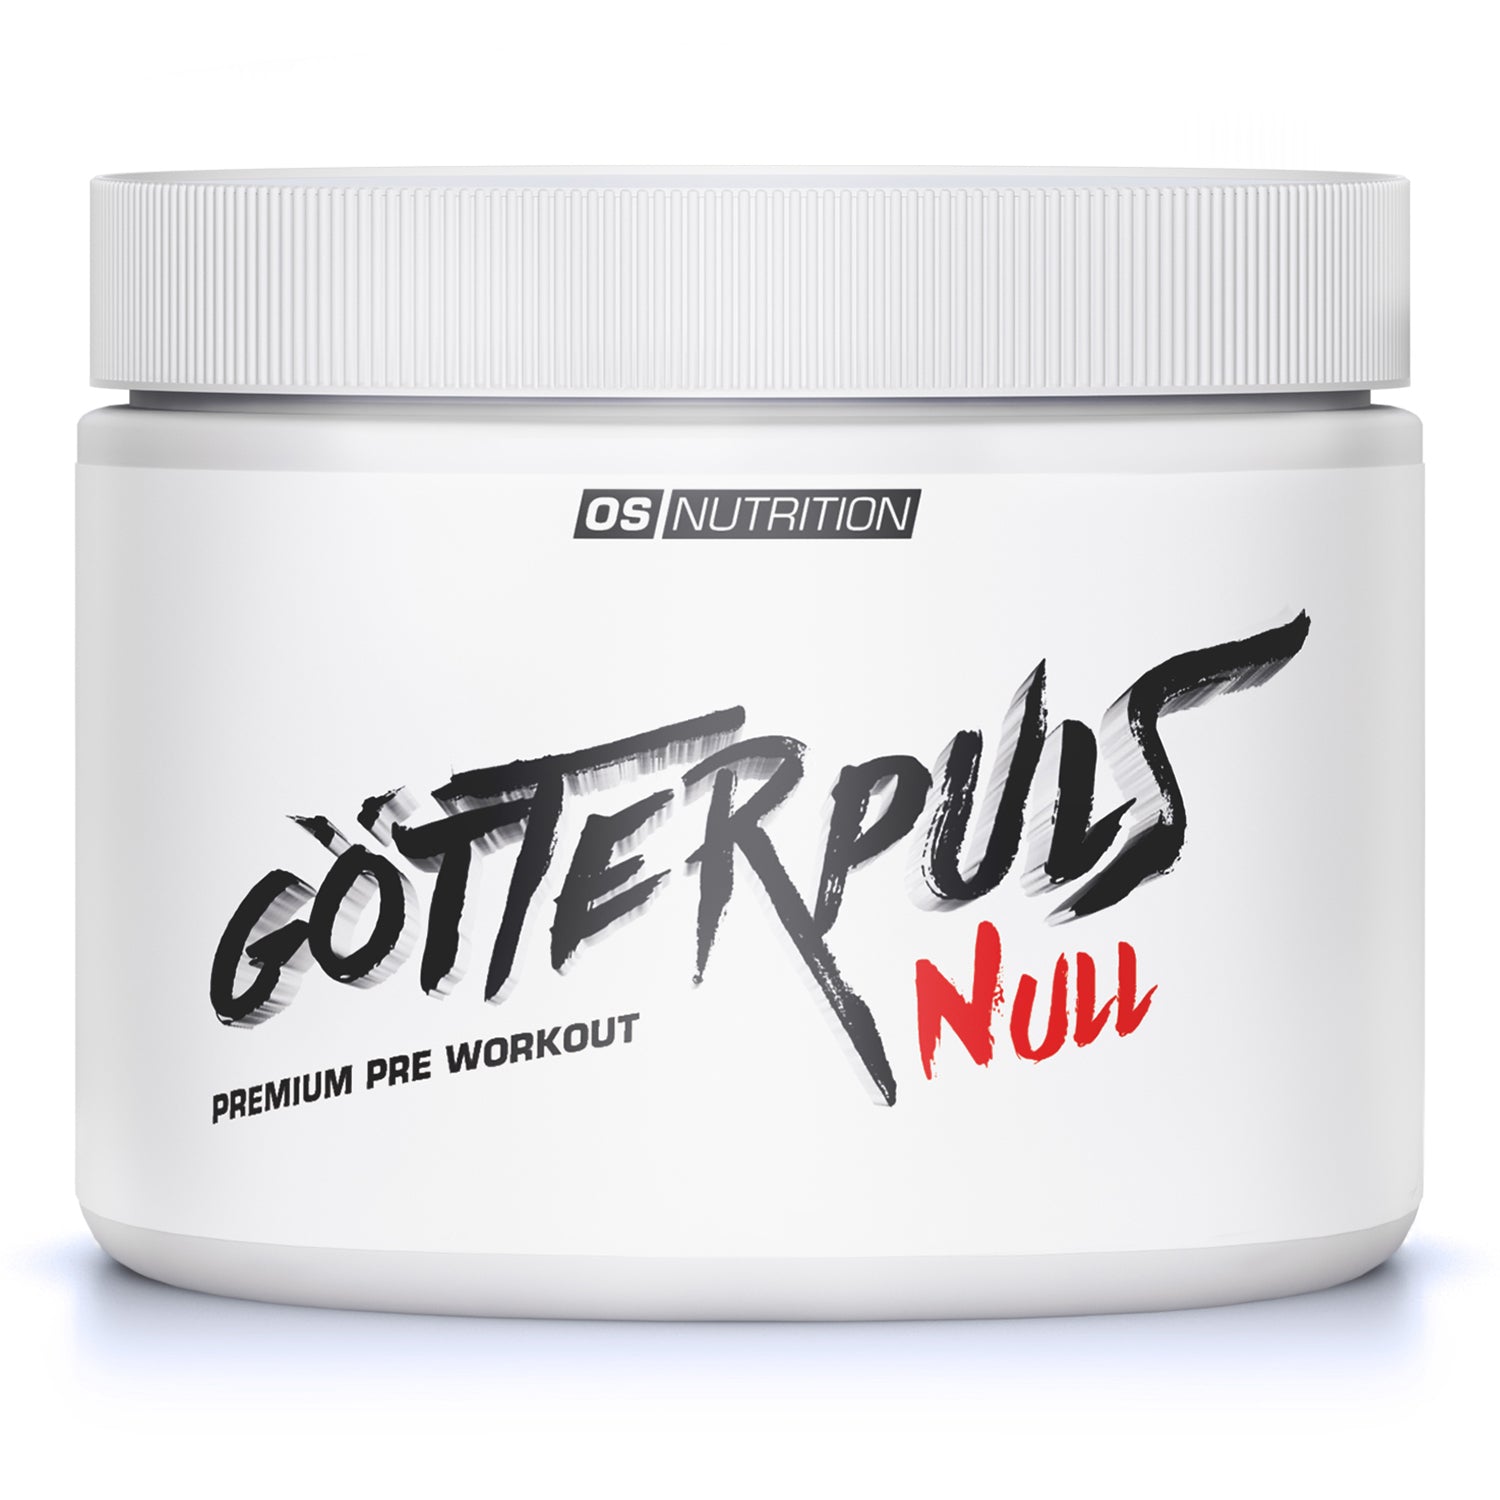 Götterpuls® NULL - Premium Pre Workout (koffeinfrei) 300 g - OS NUTRITION